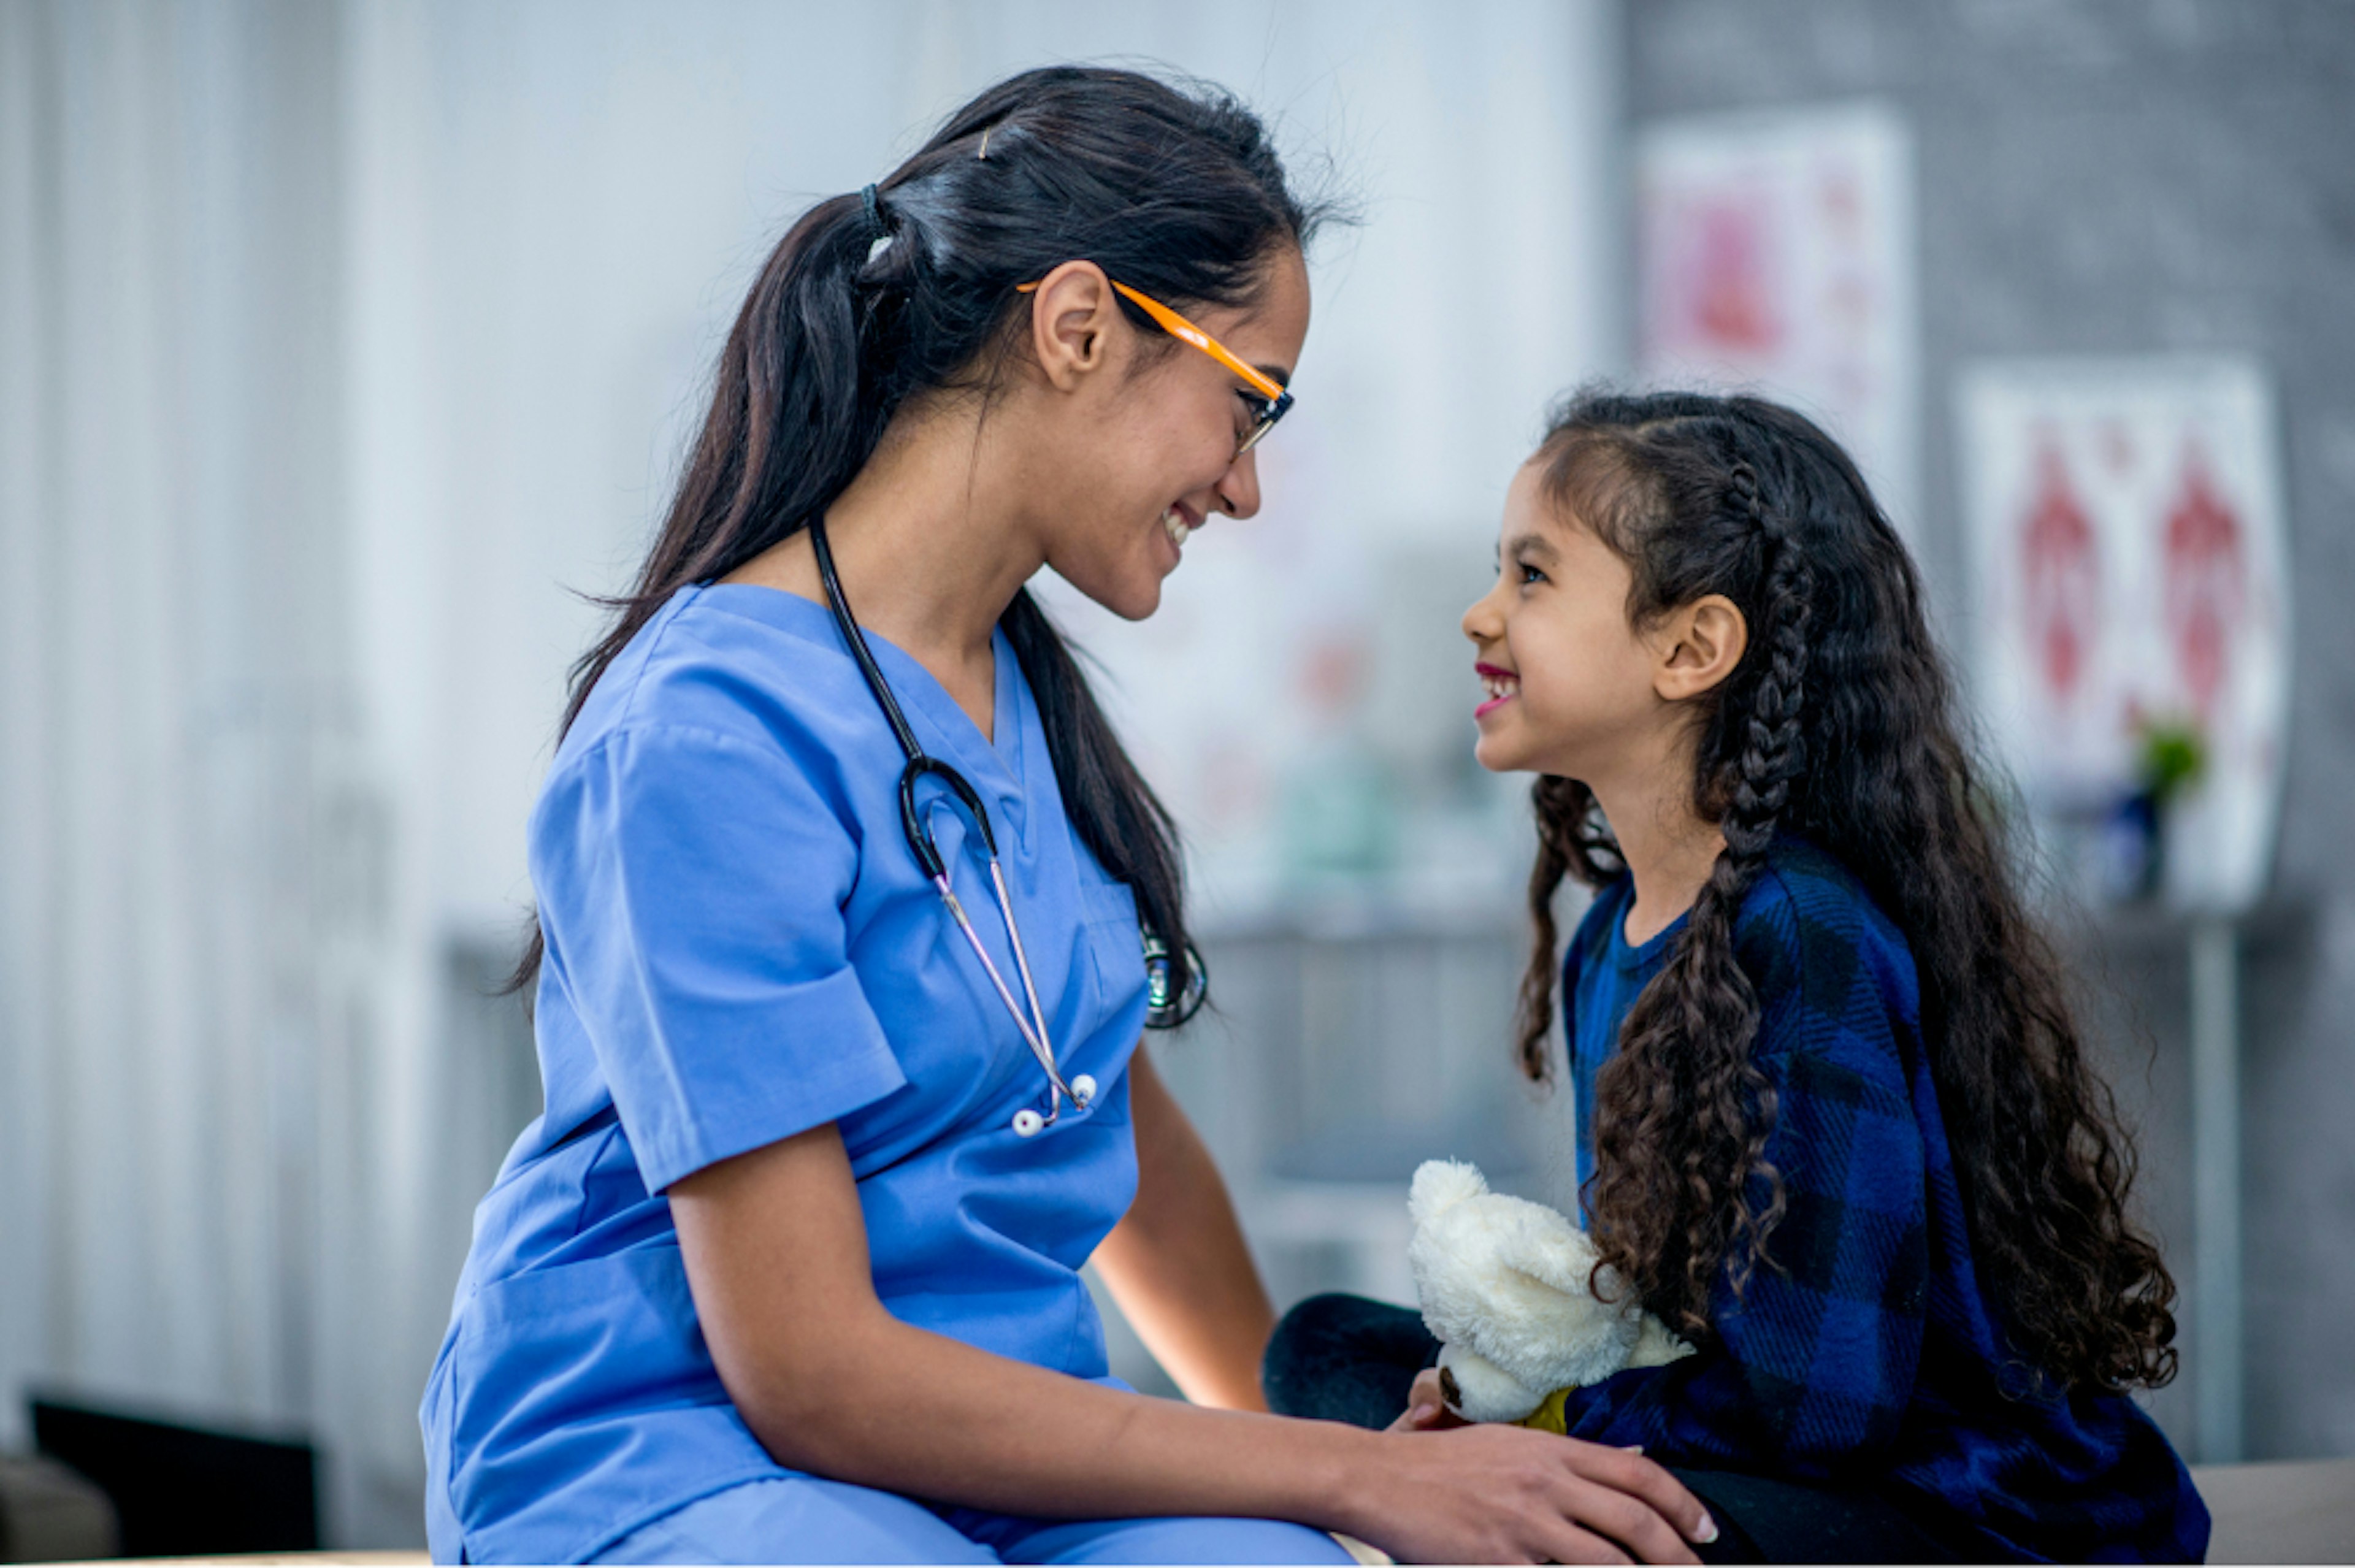 Medical & Nursing Services Tile: Nurse talking to young girl.